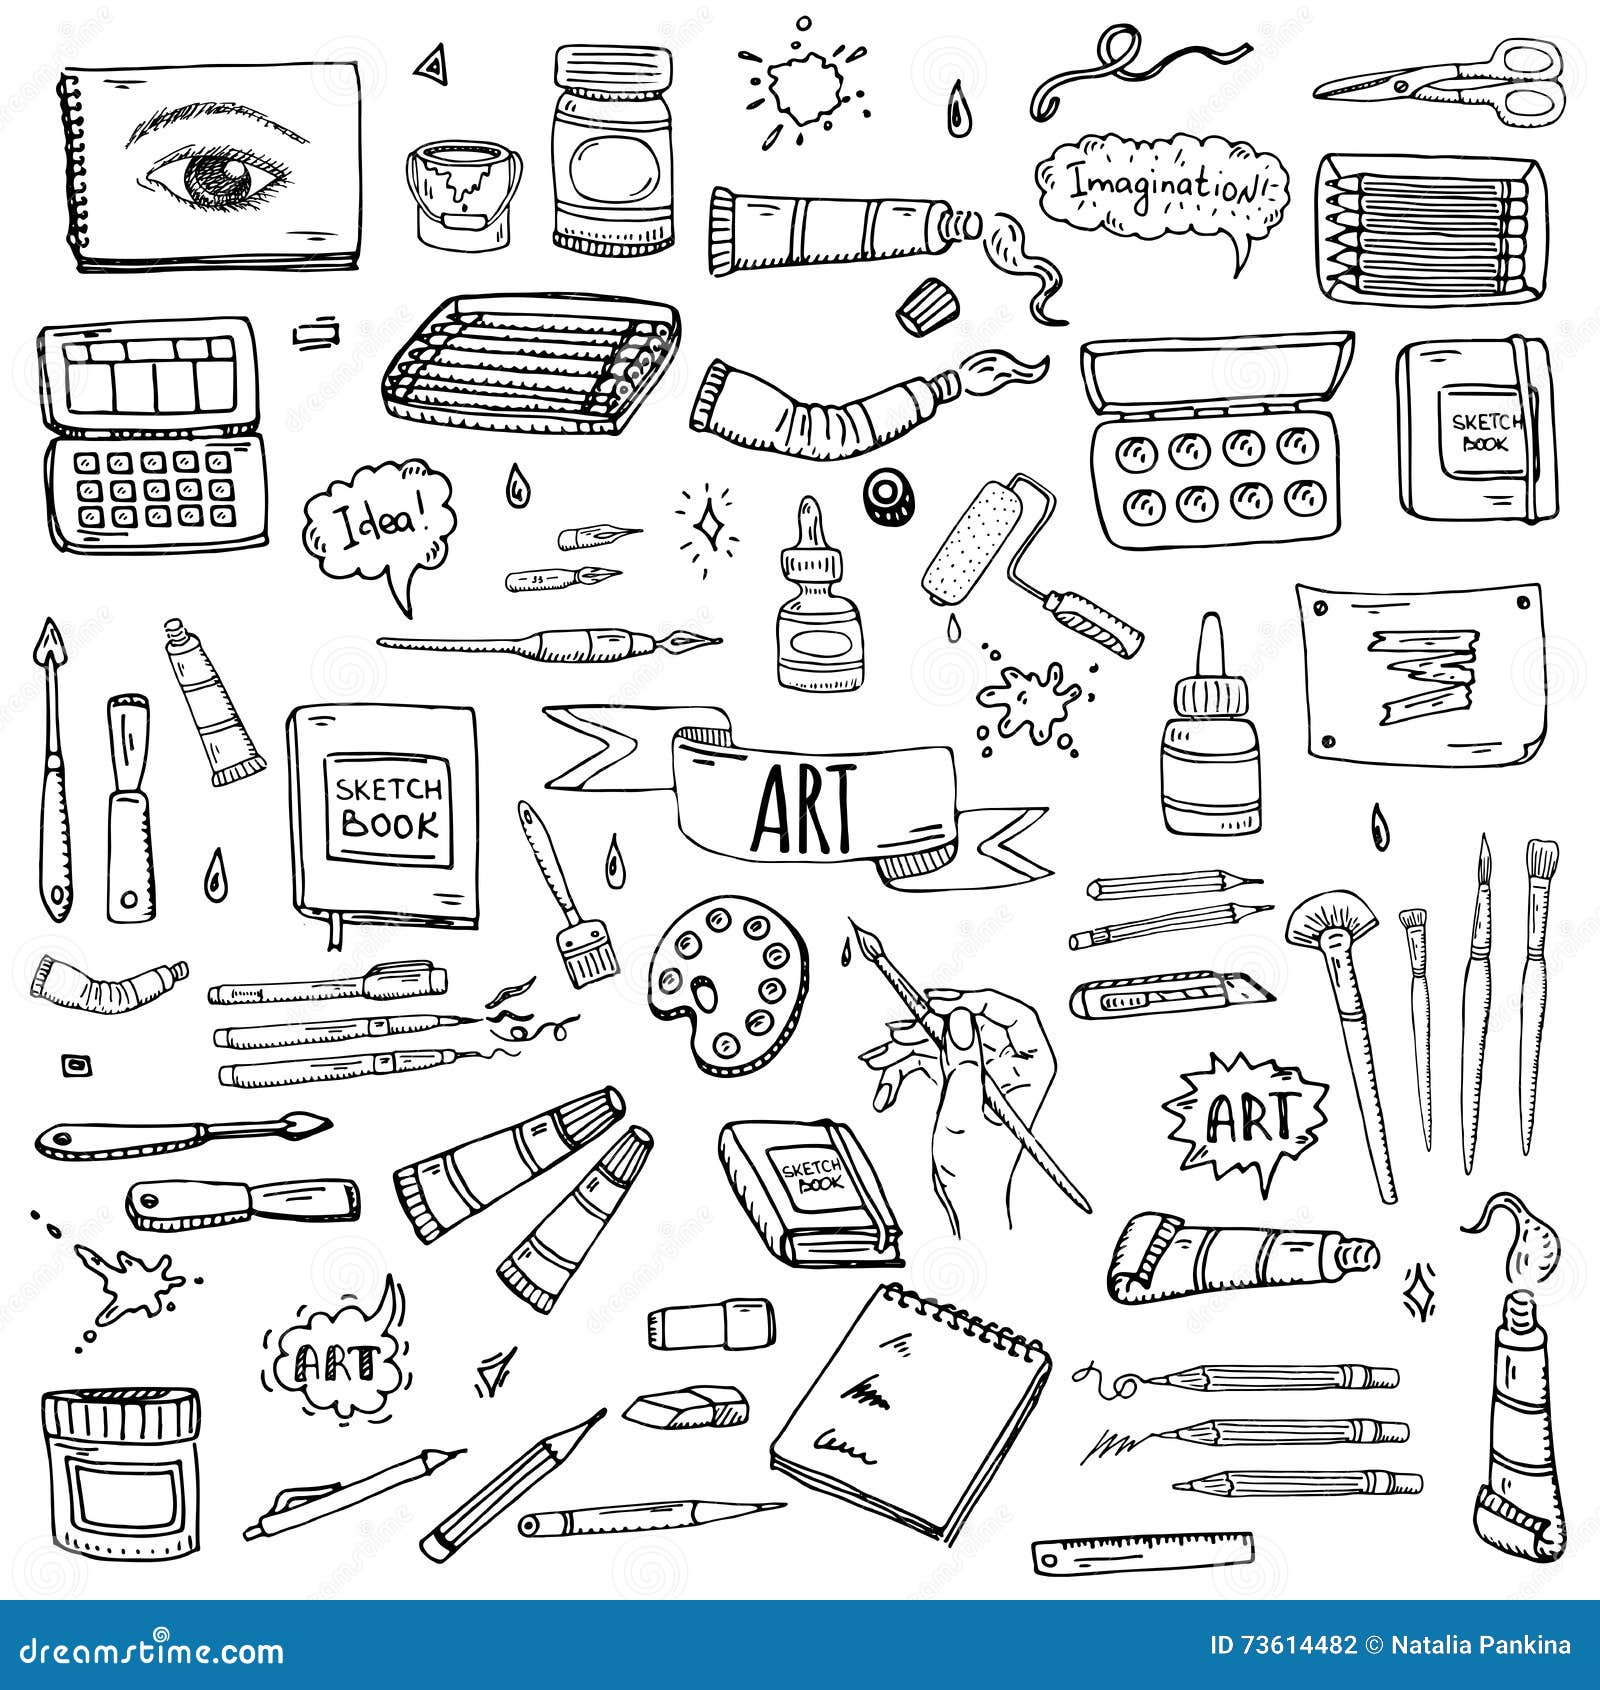 https://thumbs.dreamstime.com/z/art-craft-hand-drawn-doodle-tools-icons-set-vector-illustration-instruments-symbols-collection-cartoon-various-tools-73614482.jpg